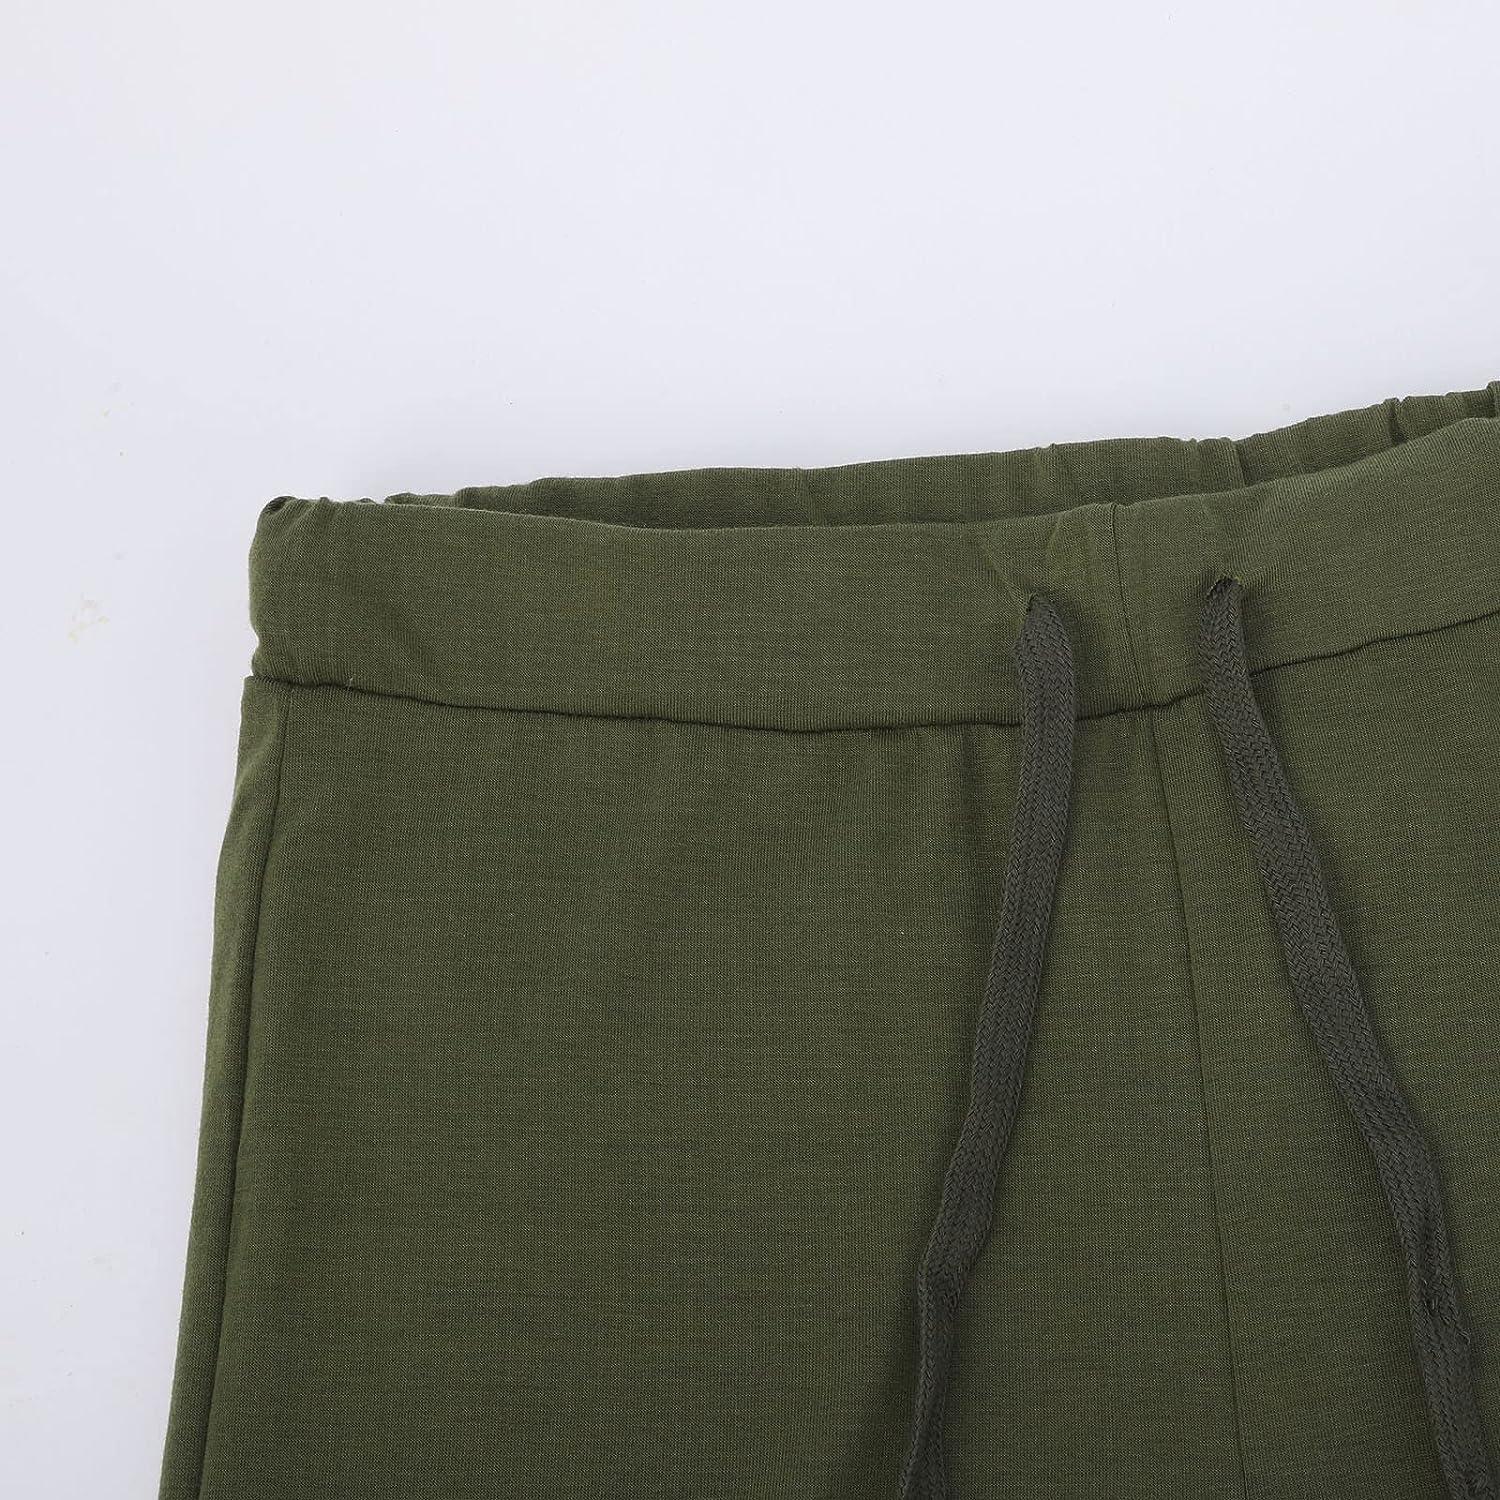 MALAIDOG Womens Casual High Waisted Bootcut Cargo Yoga Pants with